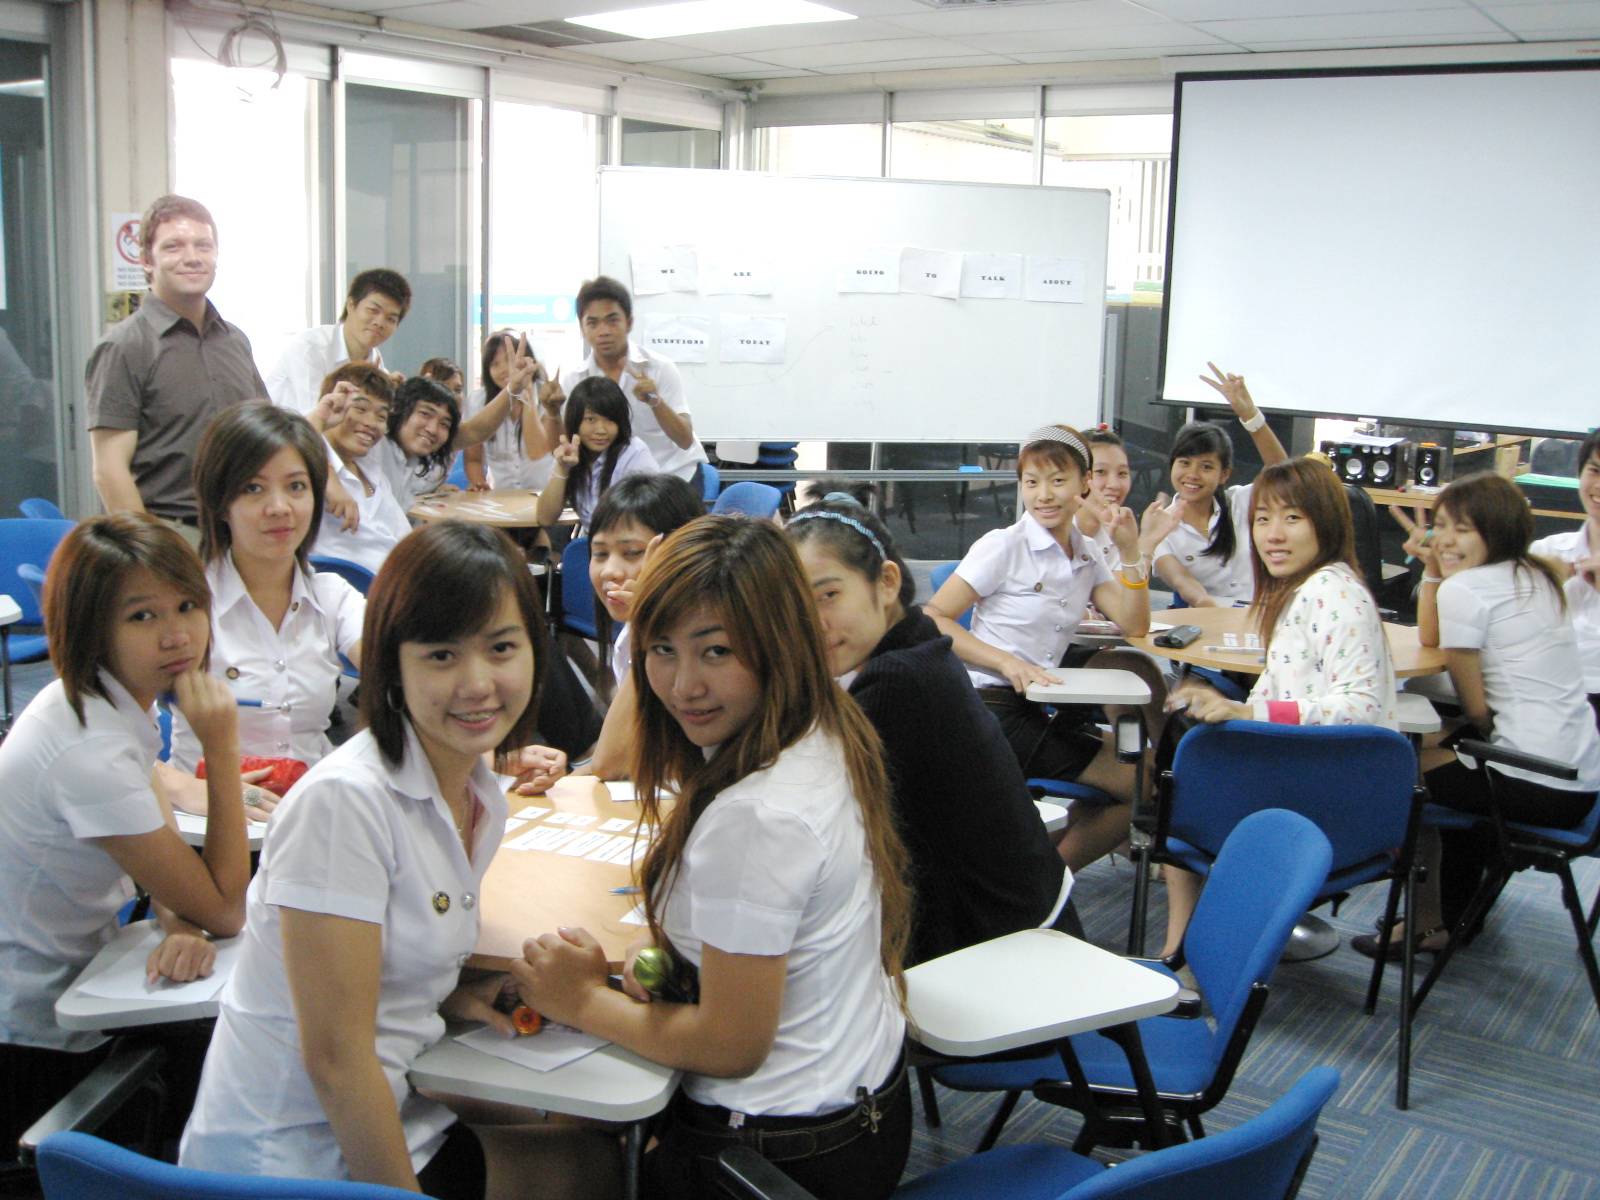 Students at St. John’s University in Bangkok in a 2010 file photo. Photo: R. Monthienvichienchai / CCA-SA-3.0